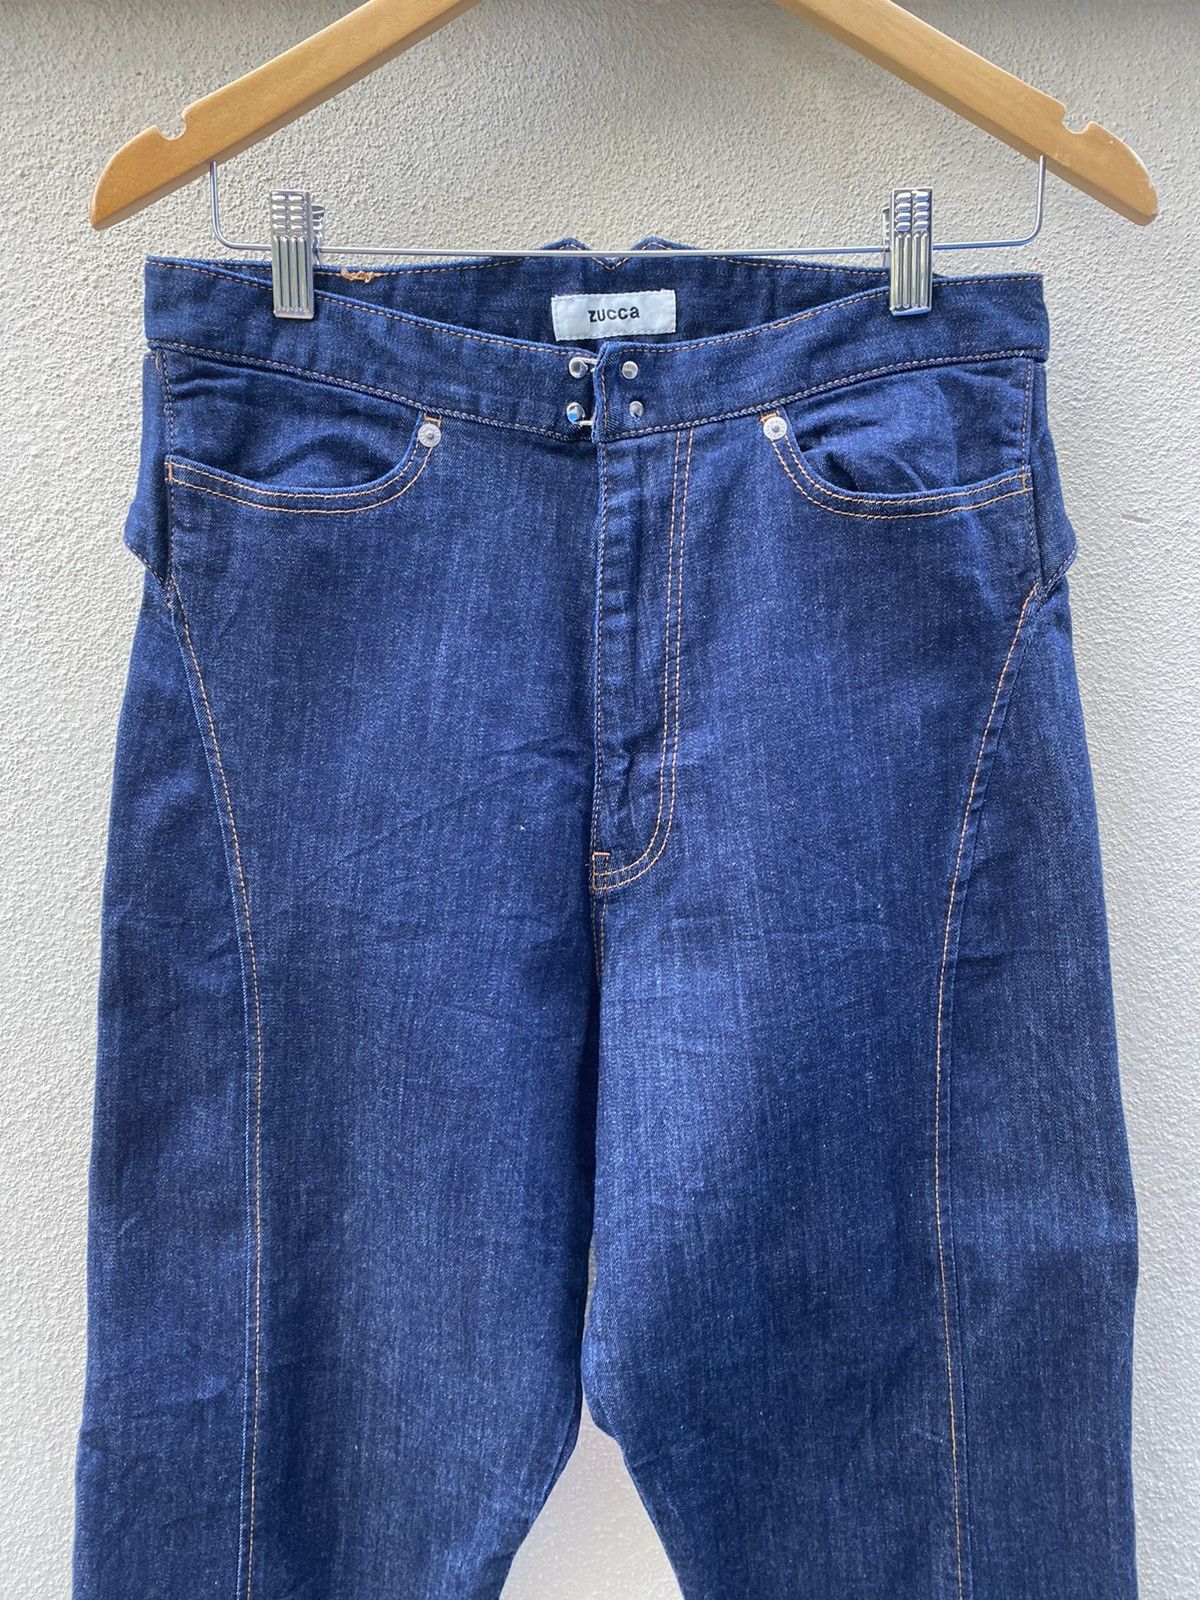 Issey Miyake - ZUCCA Stretchable Denim Jeans - 2